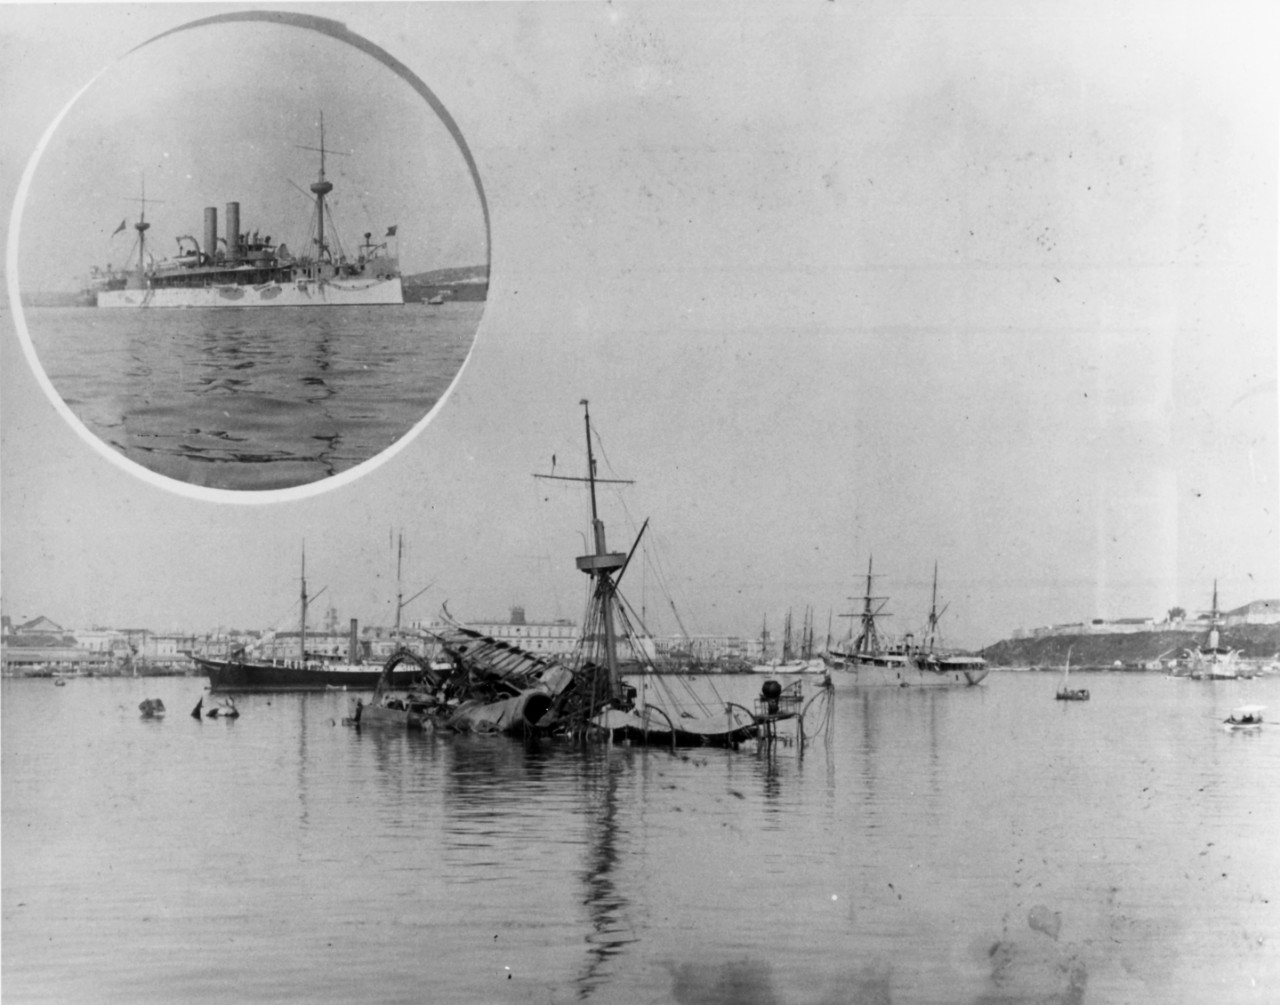 USS MAINE (1895-1898)